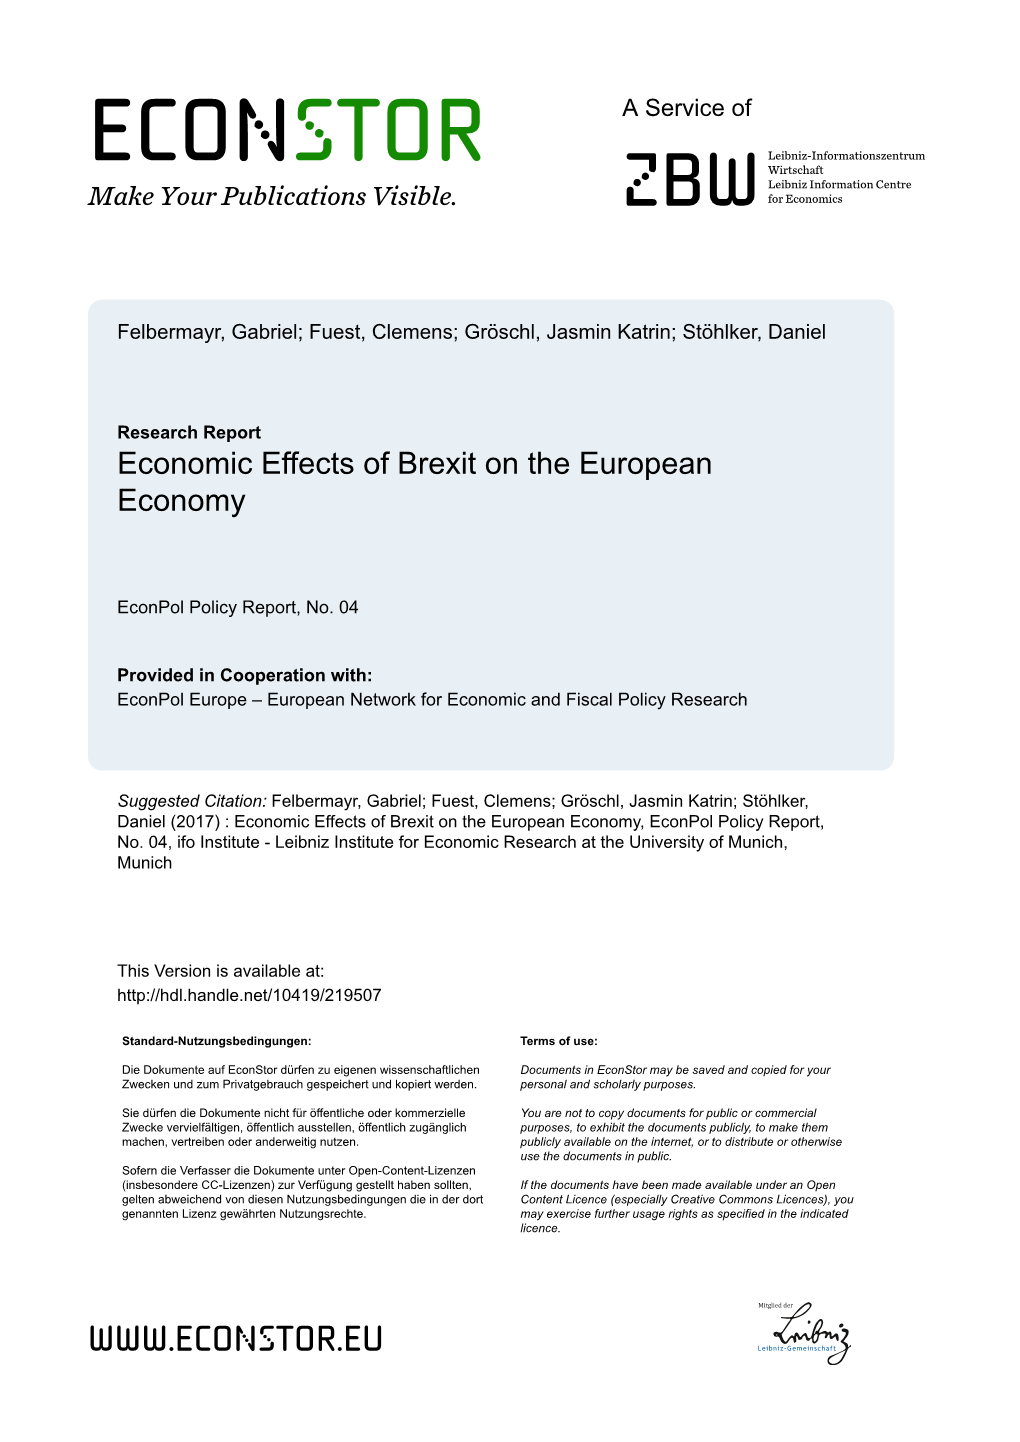 Economic Effects of Brexit on the European Economy